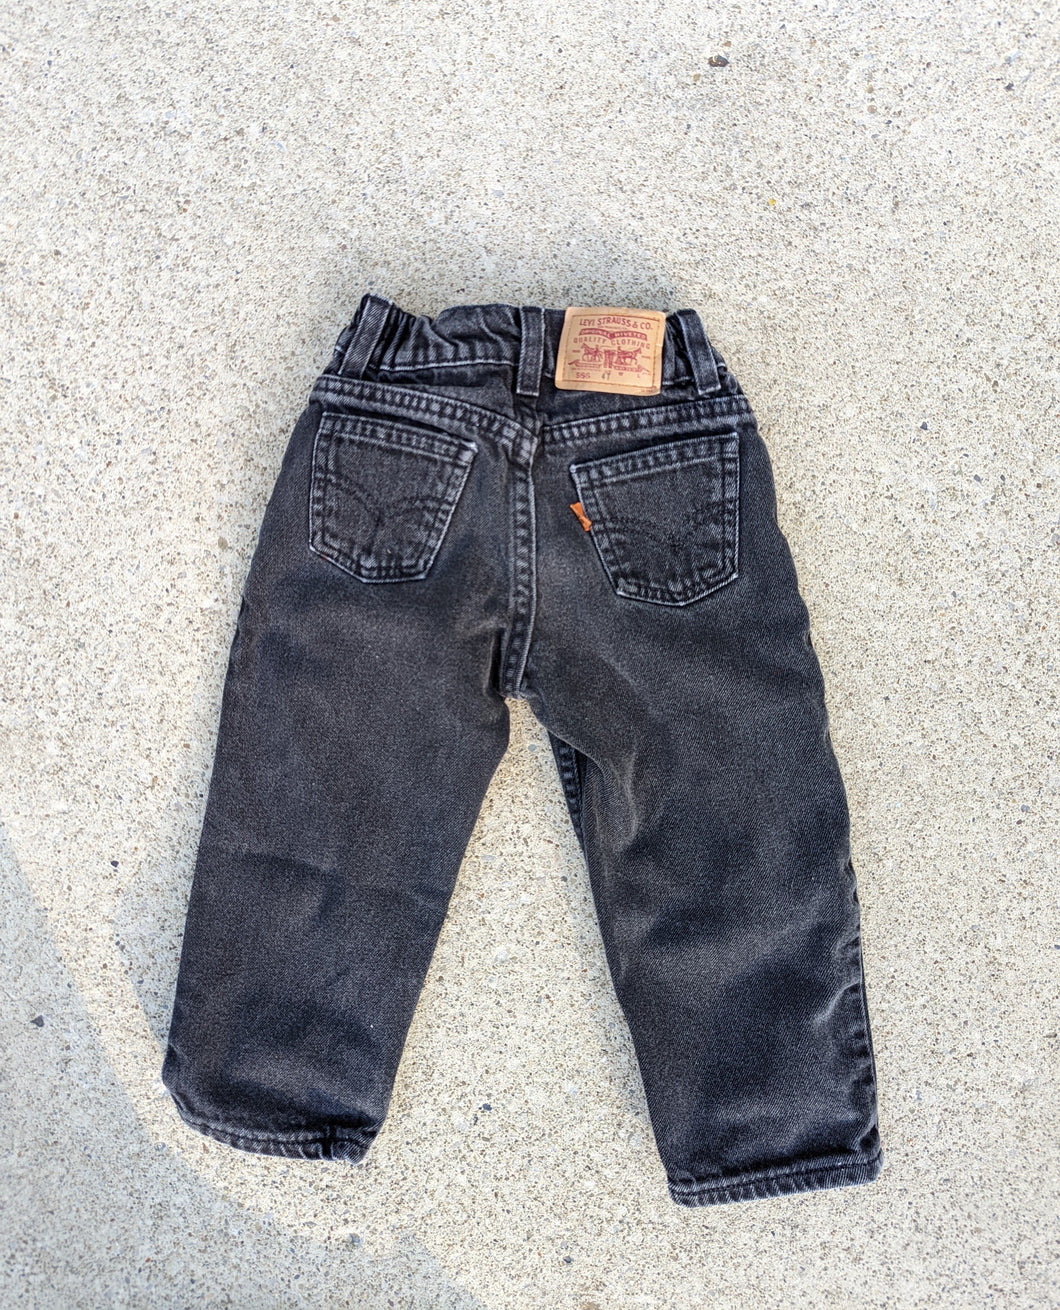 Levi's Orange Tab Black Jeans 4t